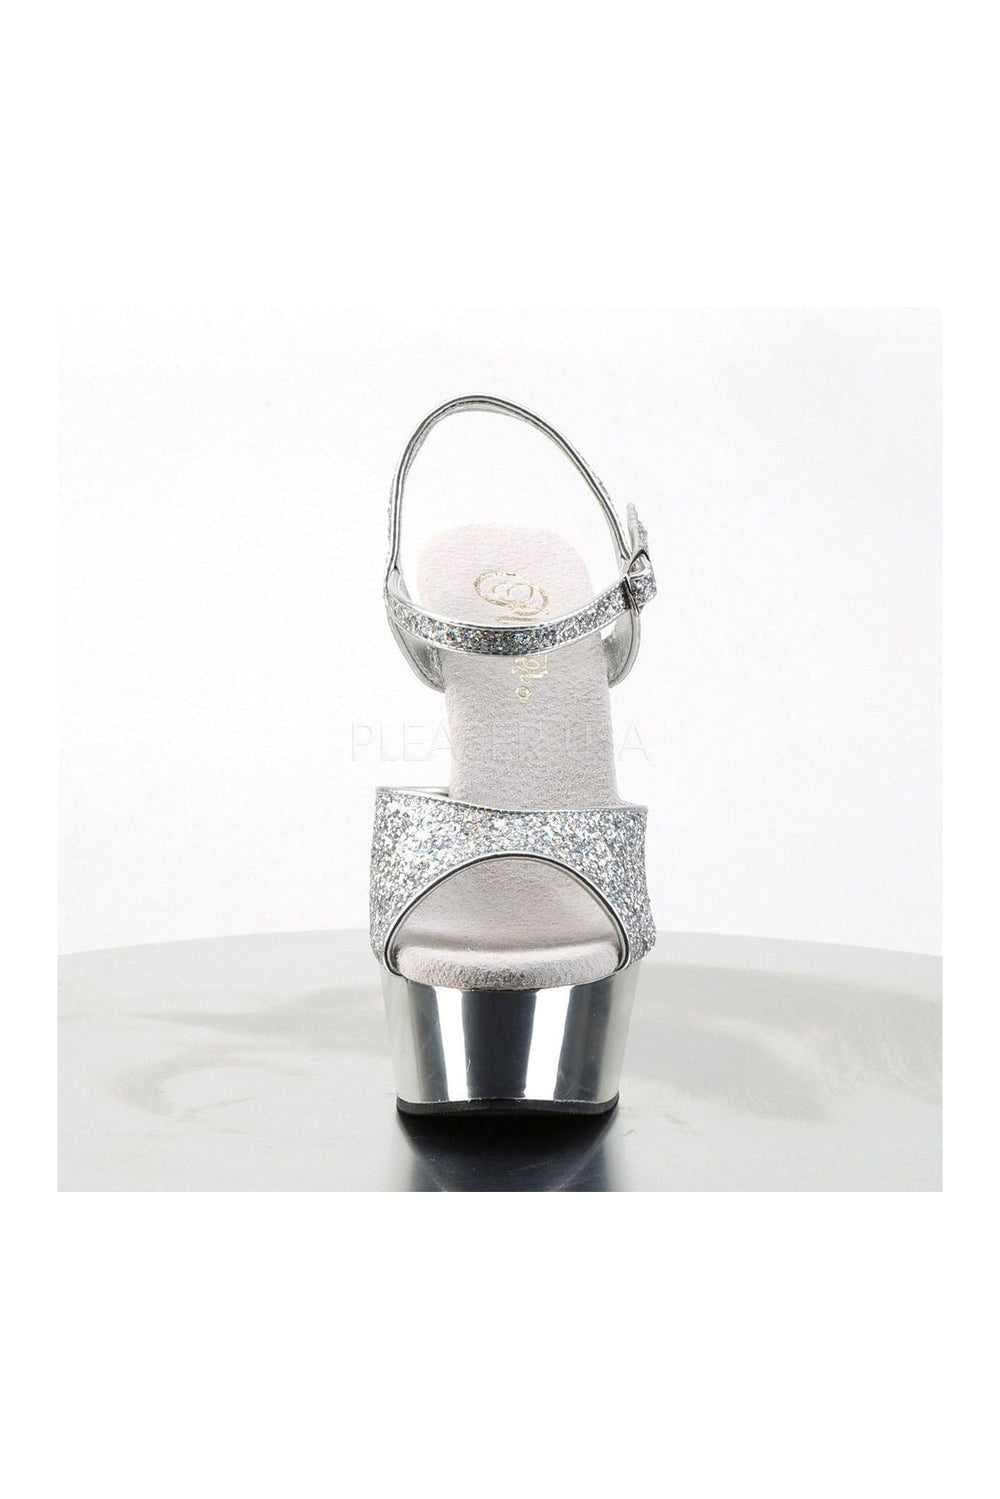 DELIGHT-609G Platform Sandal | Silver Glitter-Pleaser-Sandals-SEXYSHOES.COM